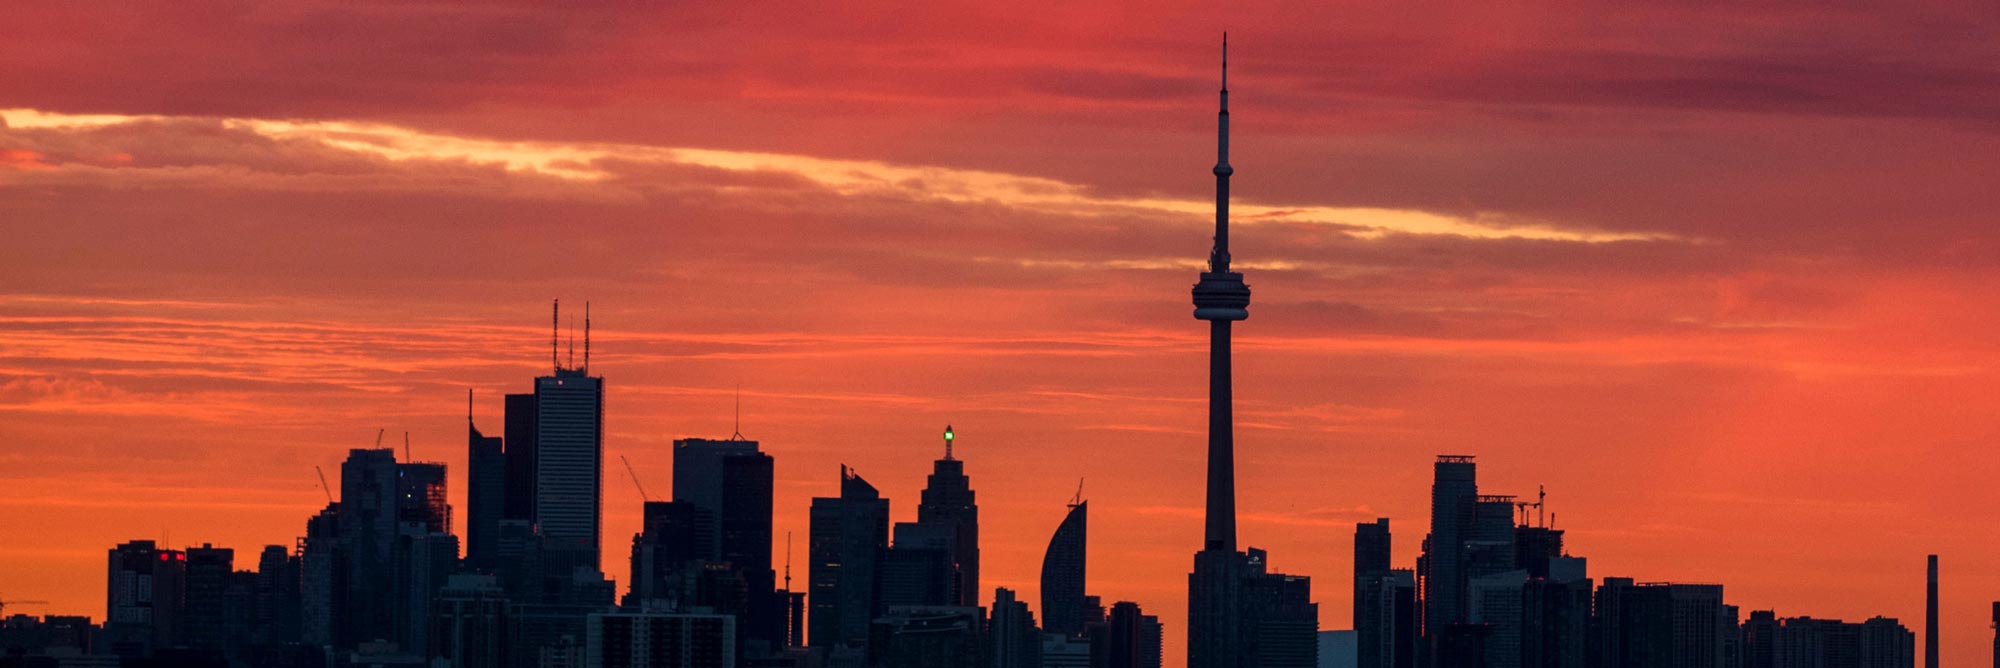 Toronto skyline with orange sunset skies.